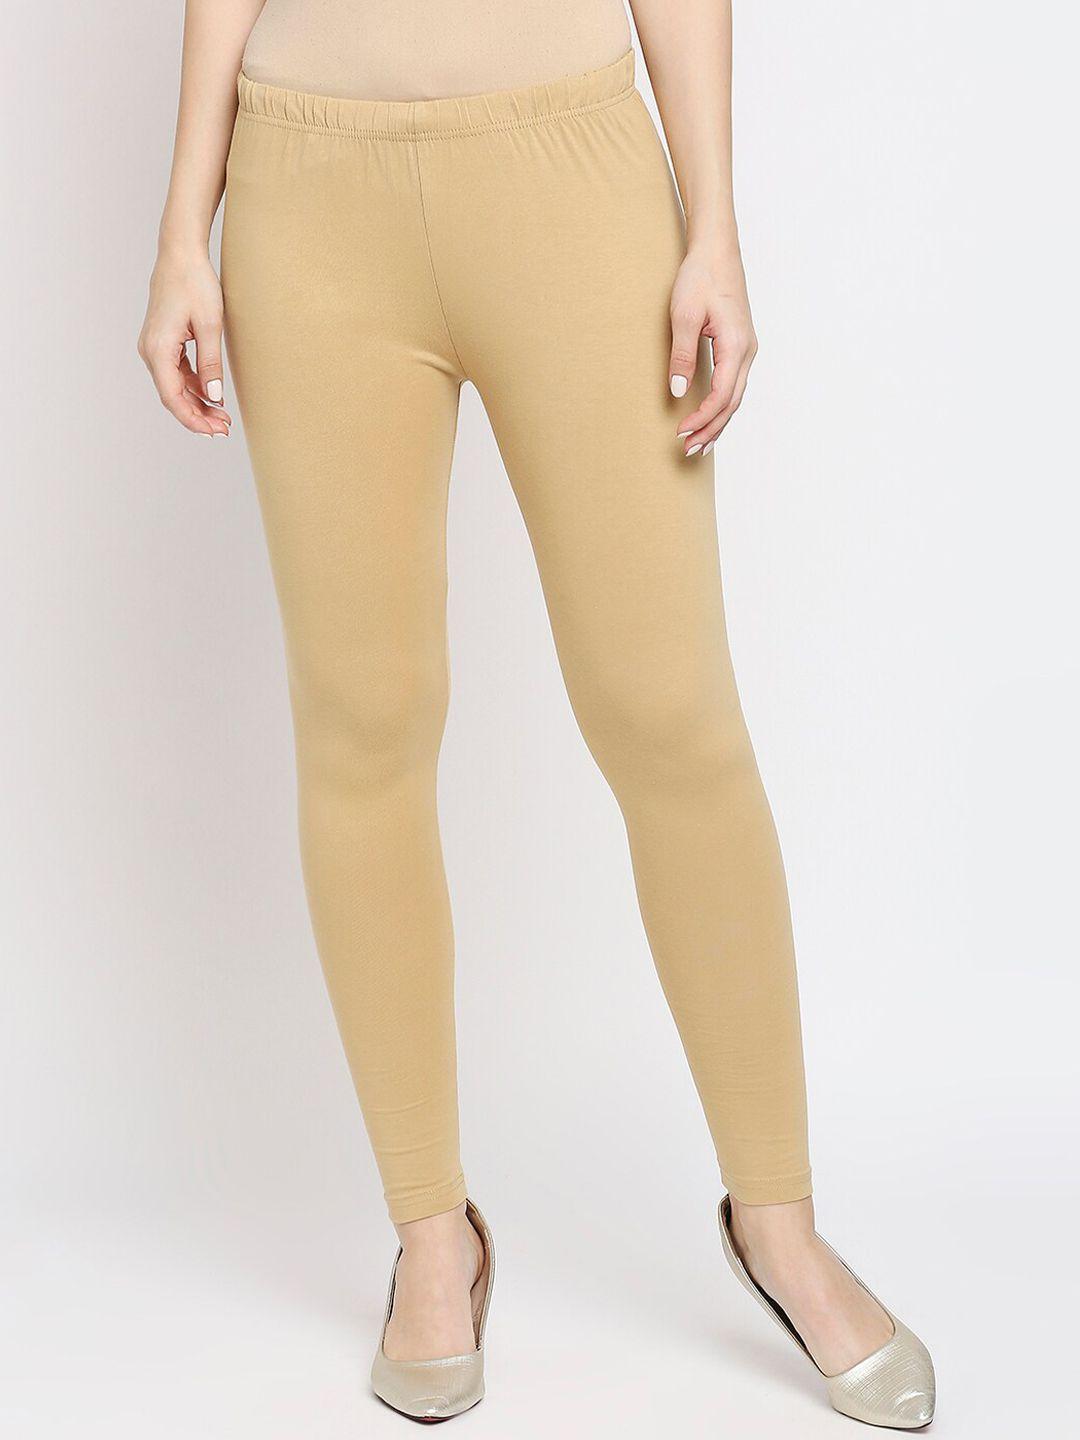 ethnicity-women-beige-solid-ankle-length-leggings